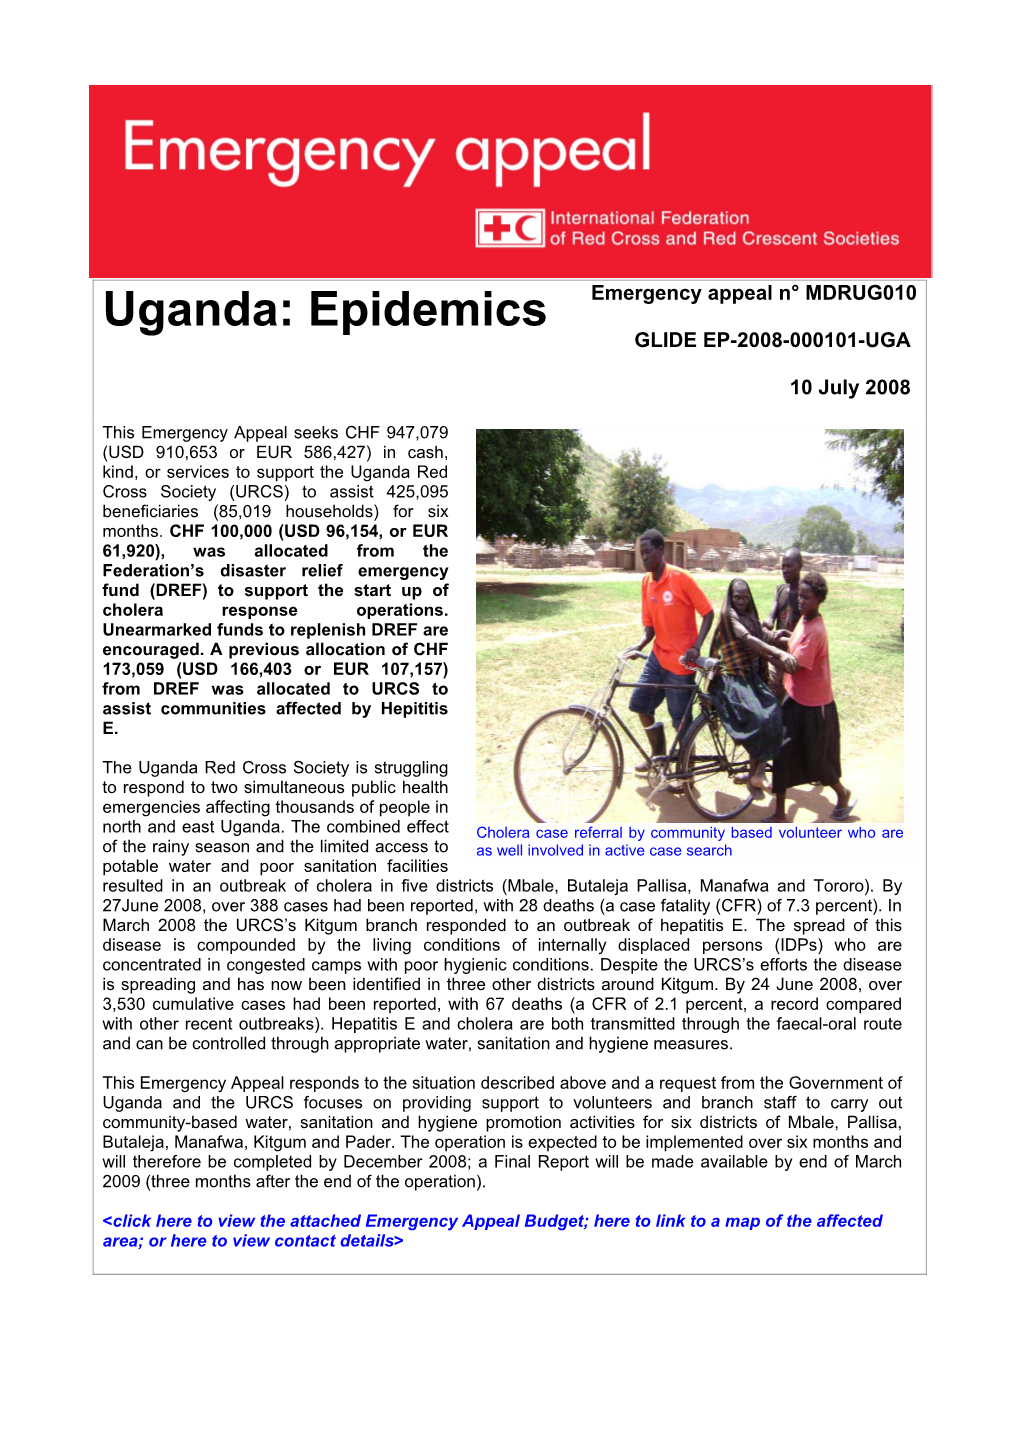 Uganda: Epidemics; Emergency Appeal No. MDRUG010